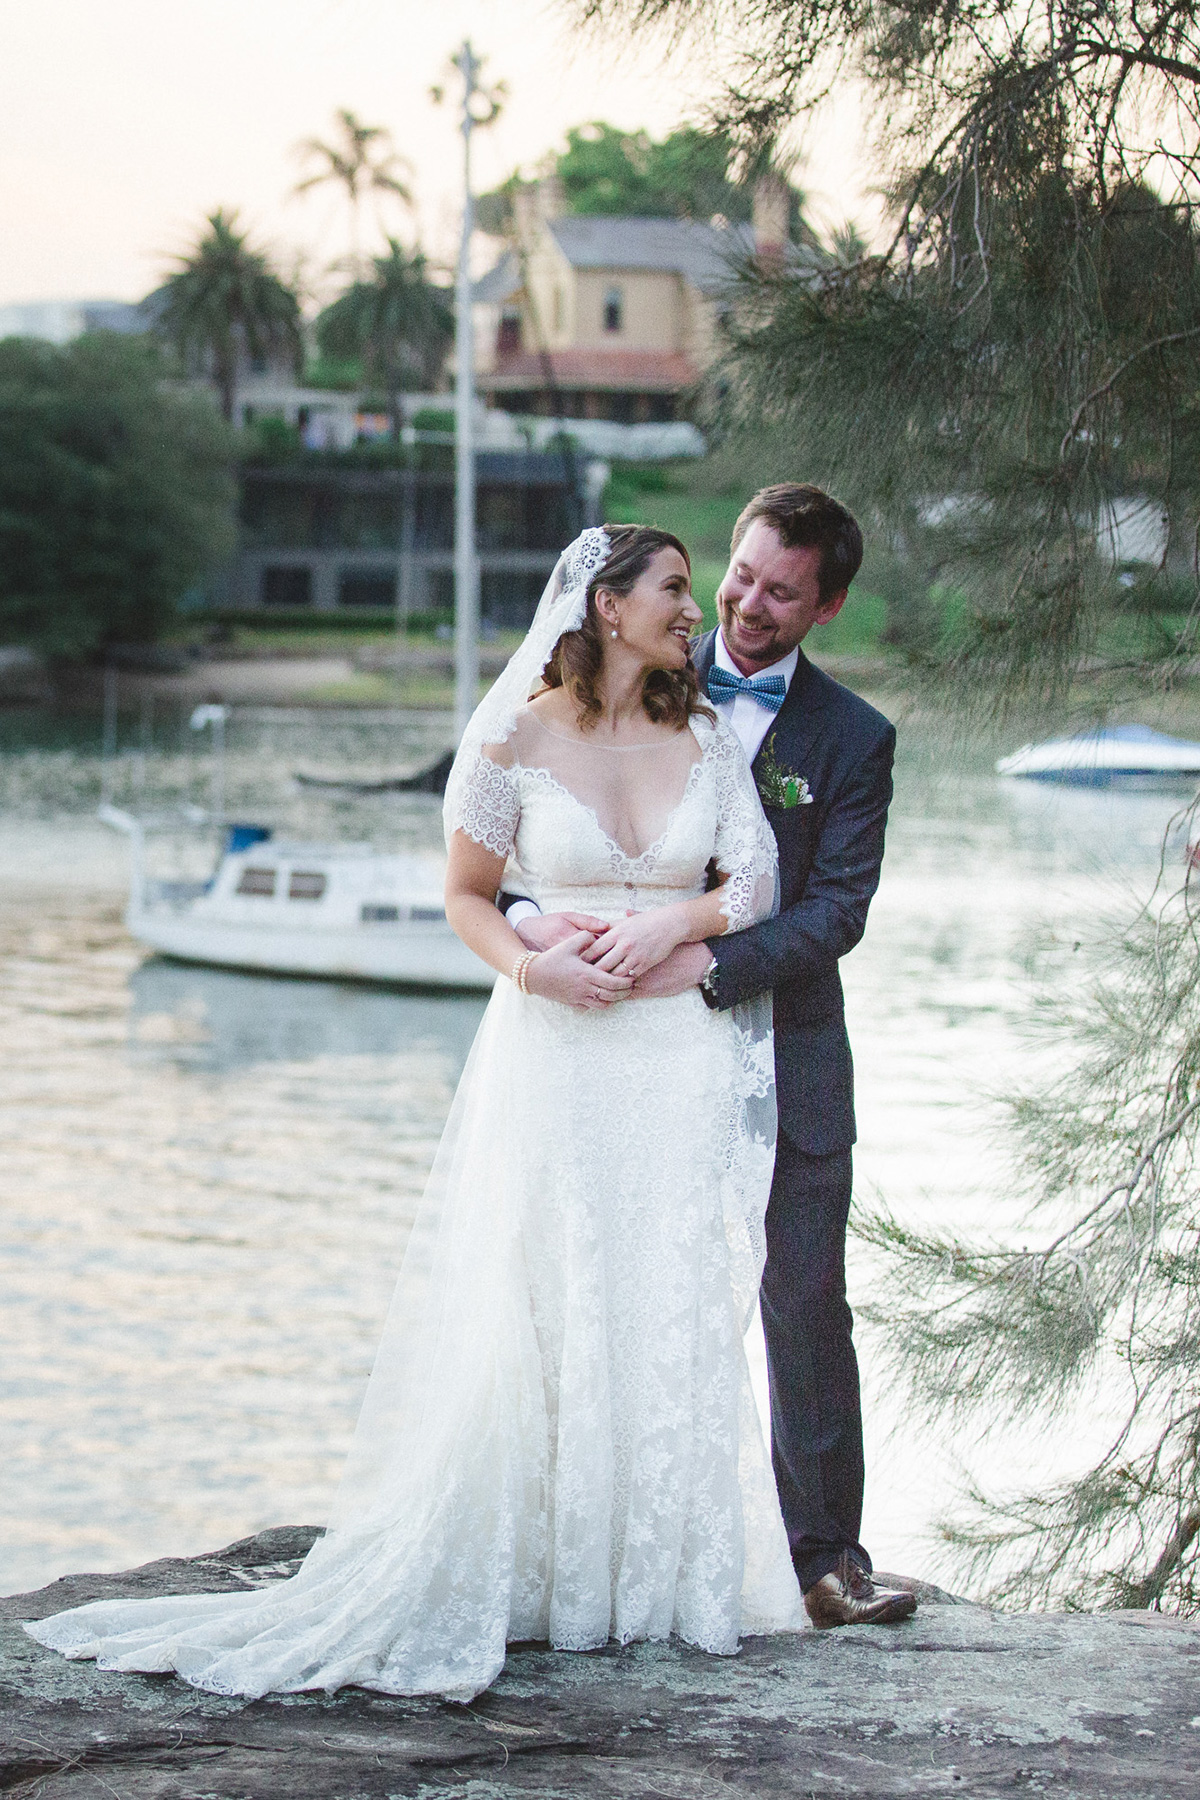 Chloe_Matt_Australian-Garden-Wedding_Dan-Luke-Photography_SBS_019